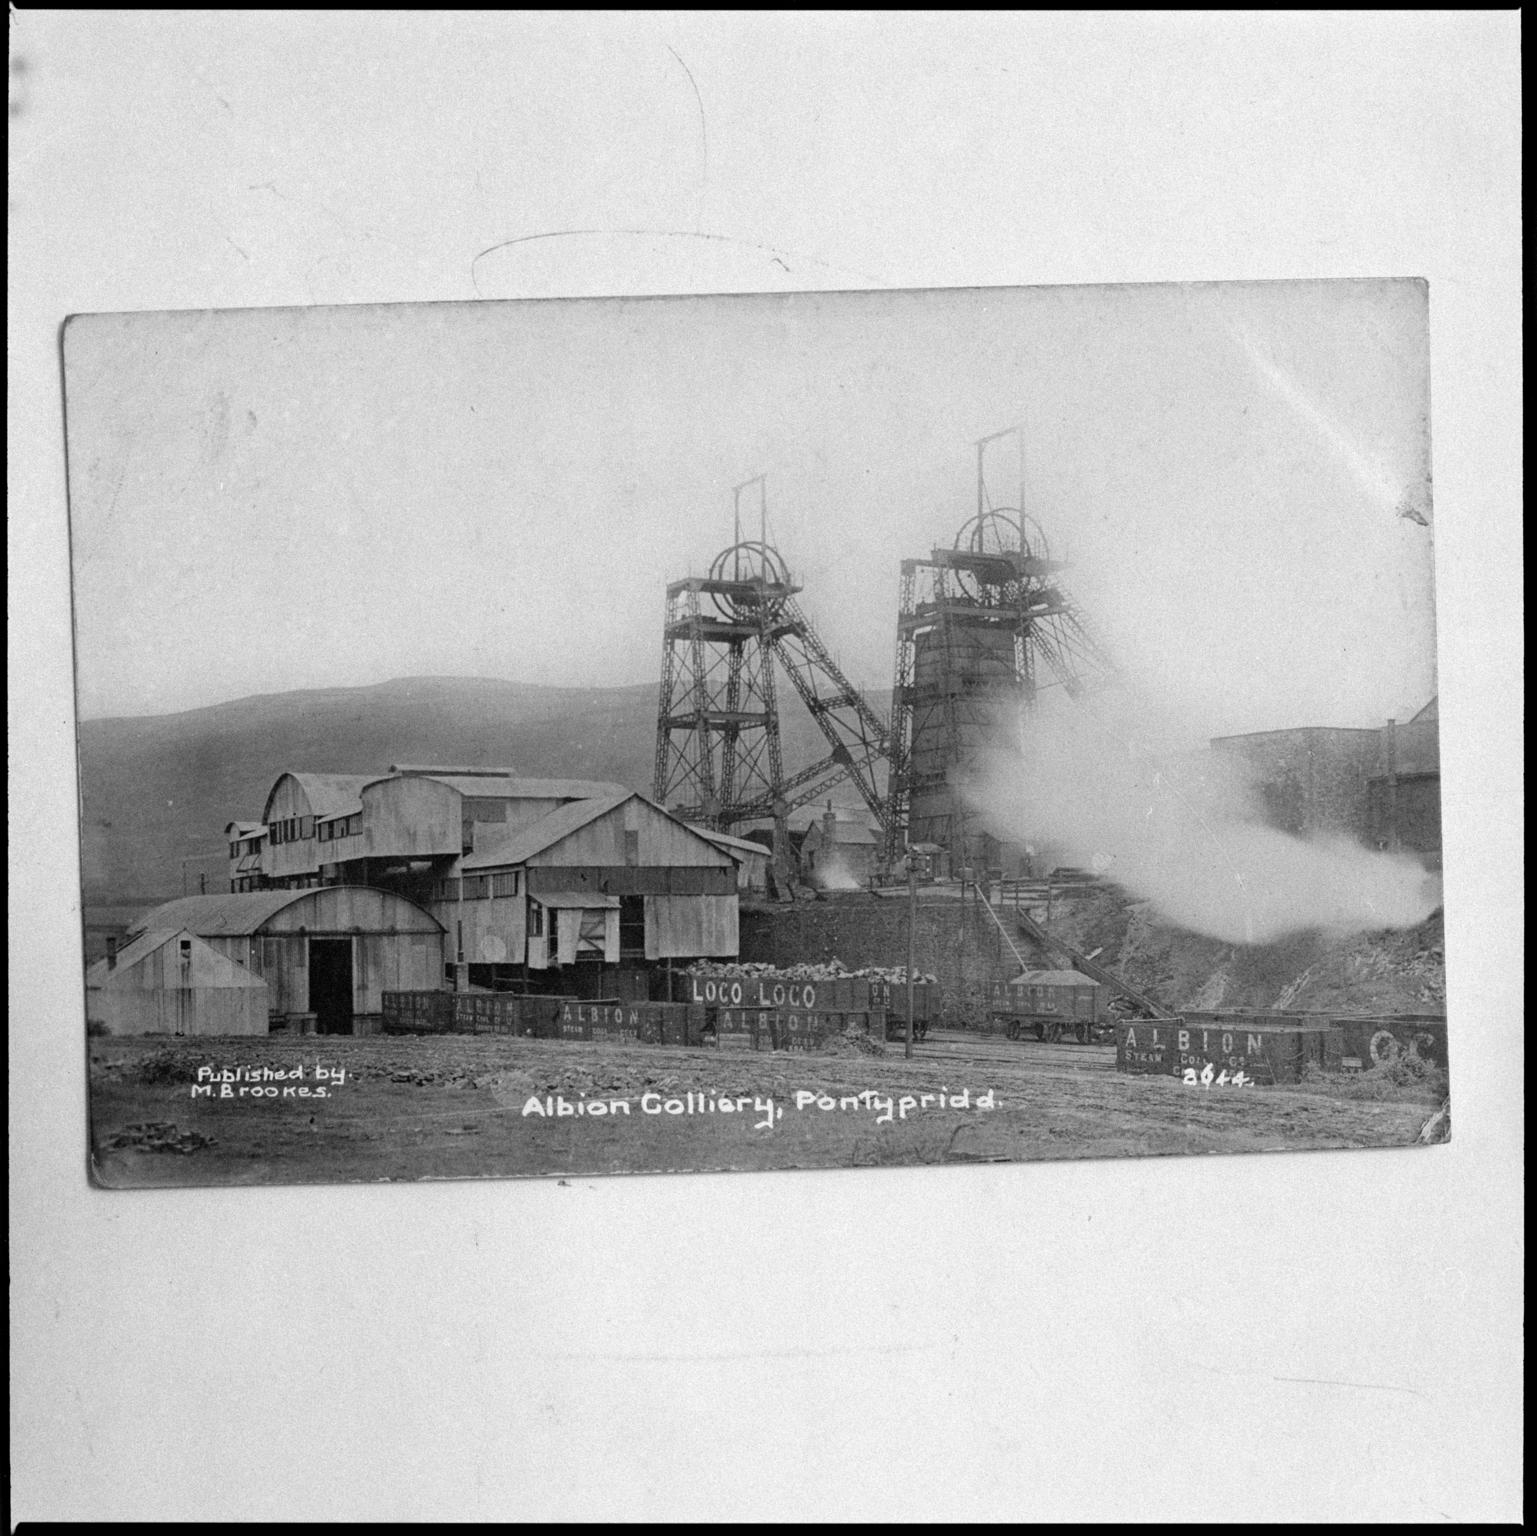 Albion Colliery, film negative